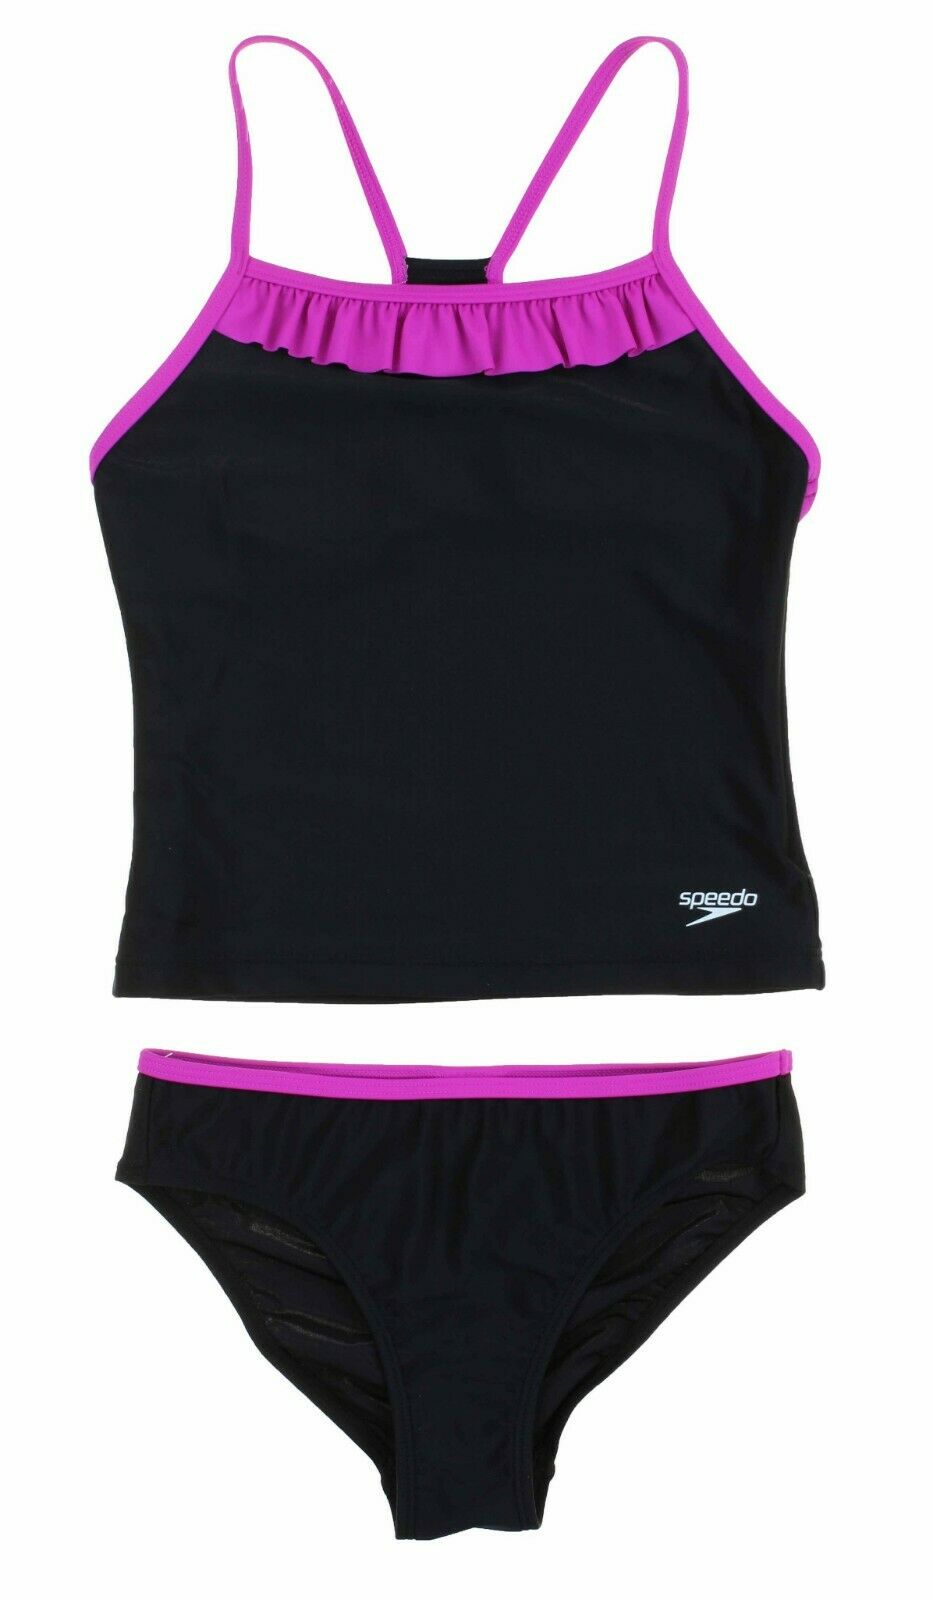 Nwot Girls 8 Speedo 2 Piece Splice Back Tankini Swim Set Suit Hot Pink & Black